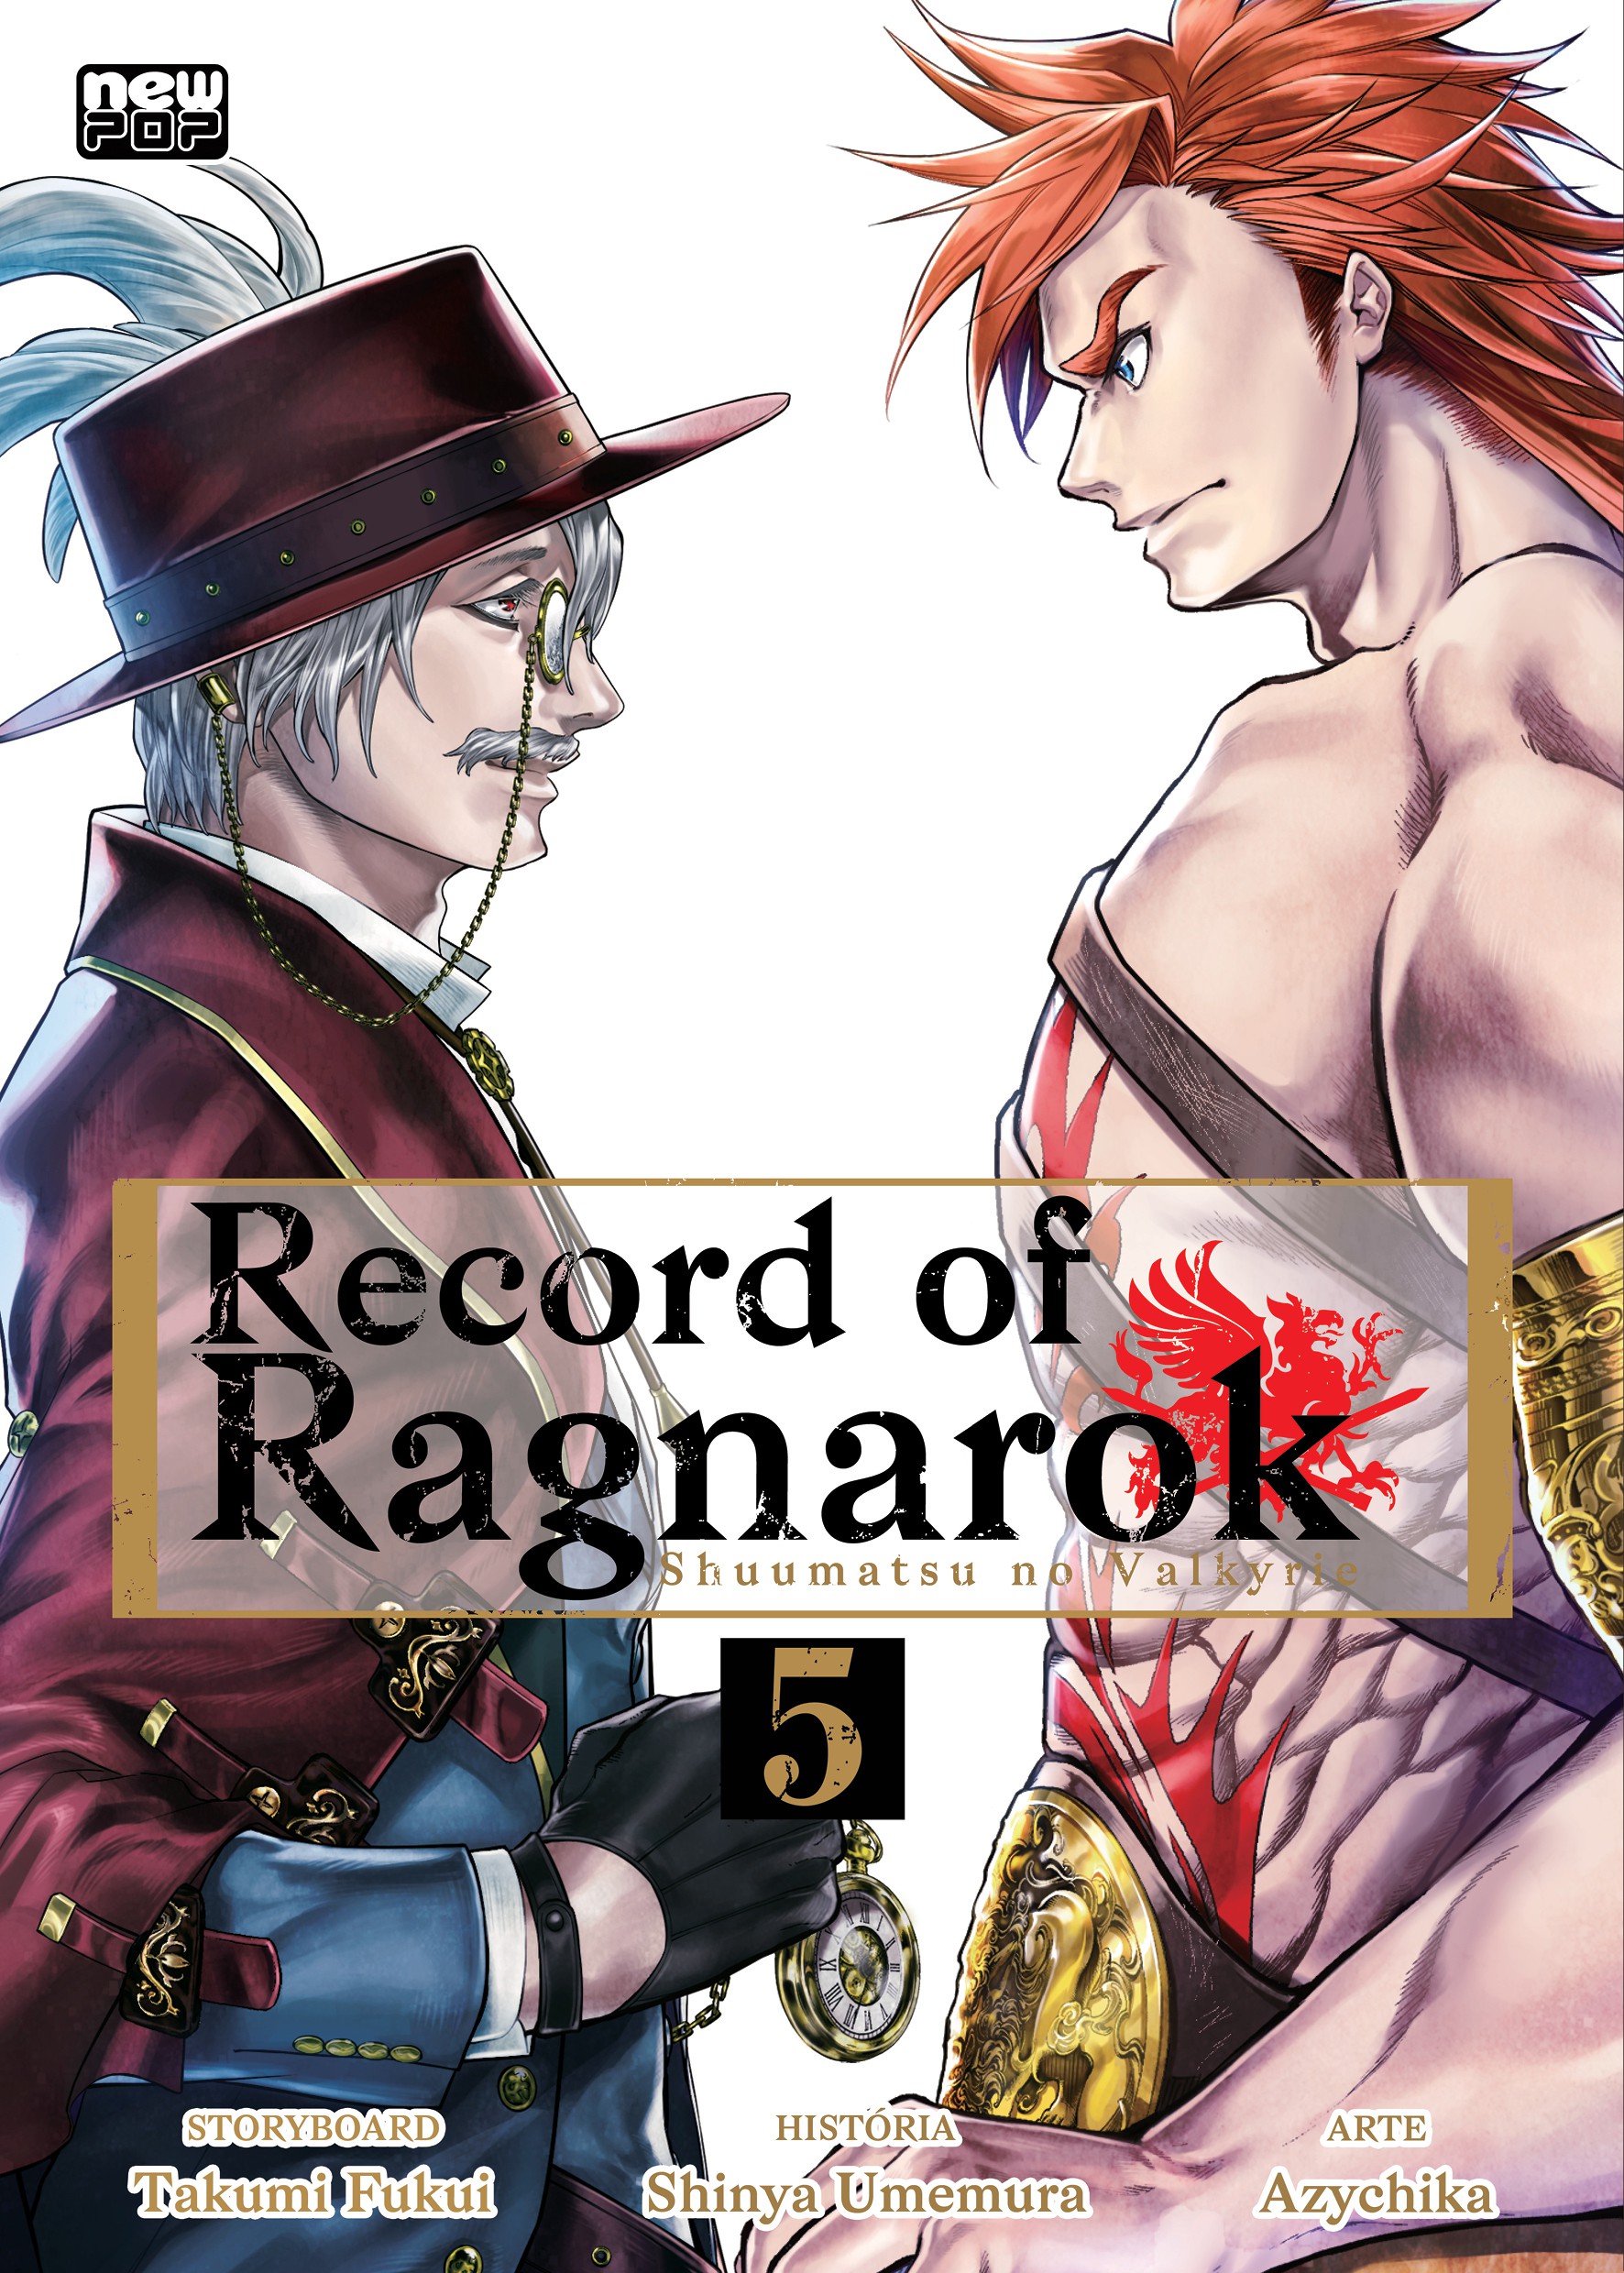 Assistir Record of Ragnarok - ver séries online